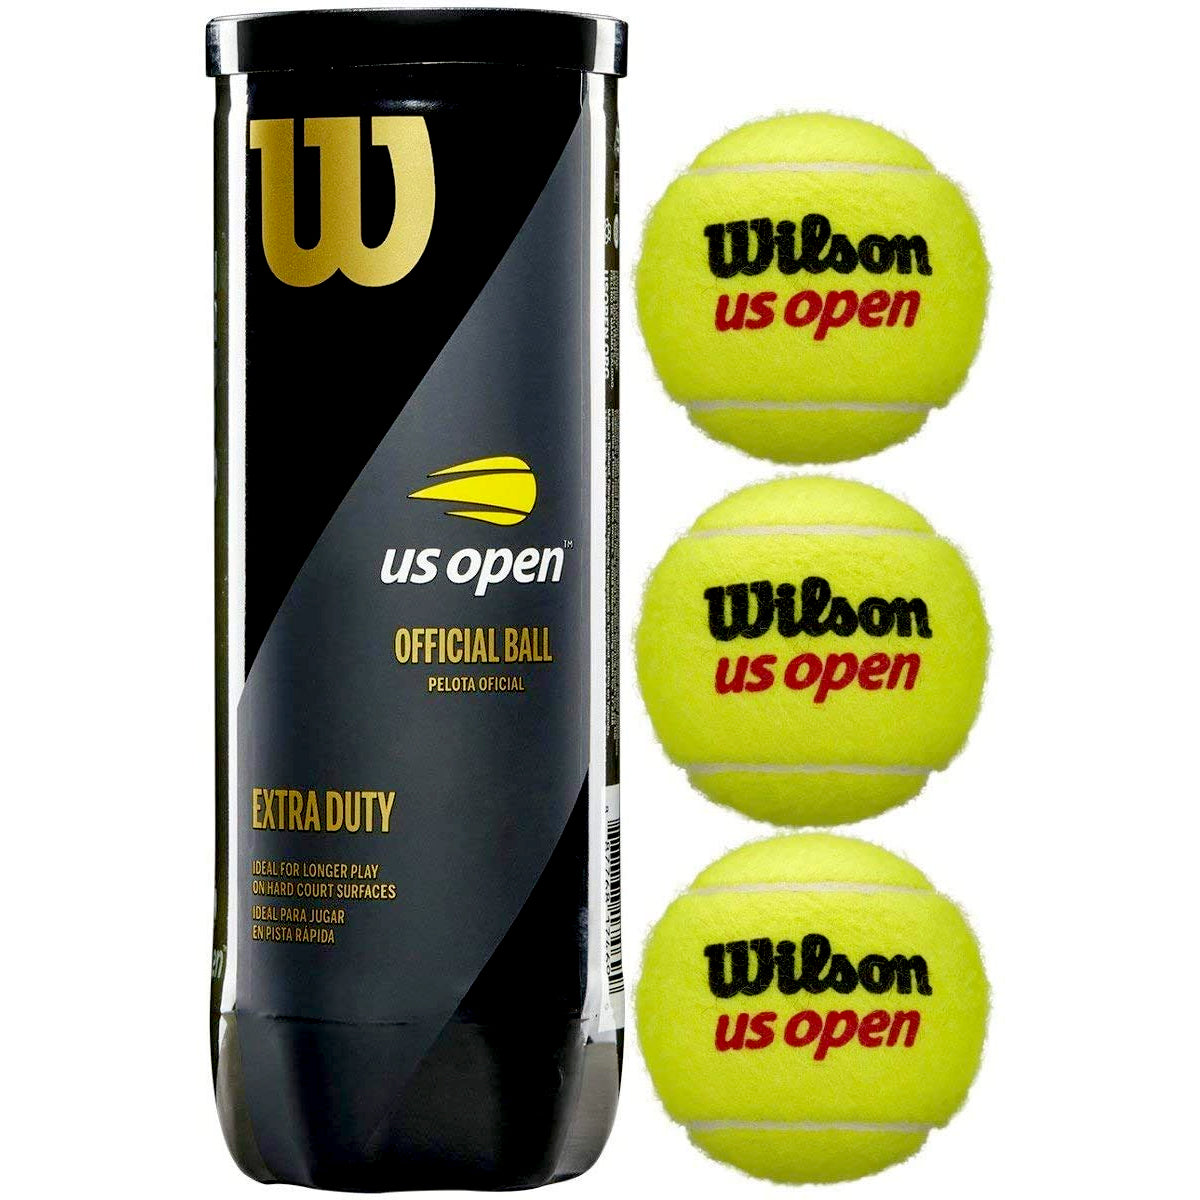 Wilson US Open Extra Duty Tennis Balls Carton (24 Cans) - Best Price online Prokicksports.com